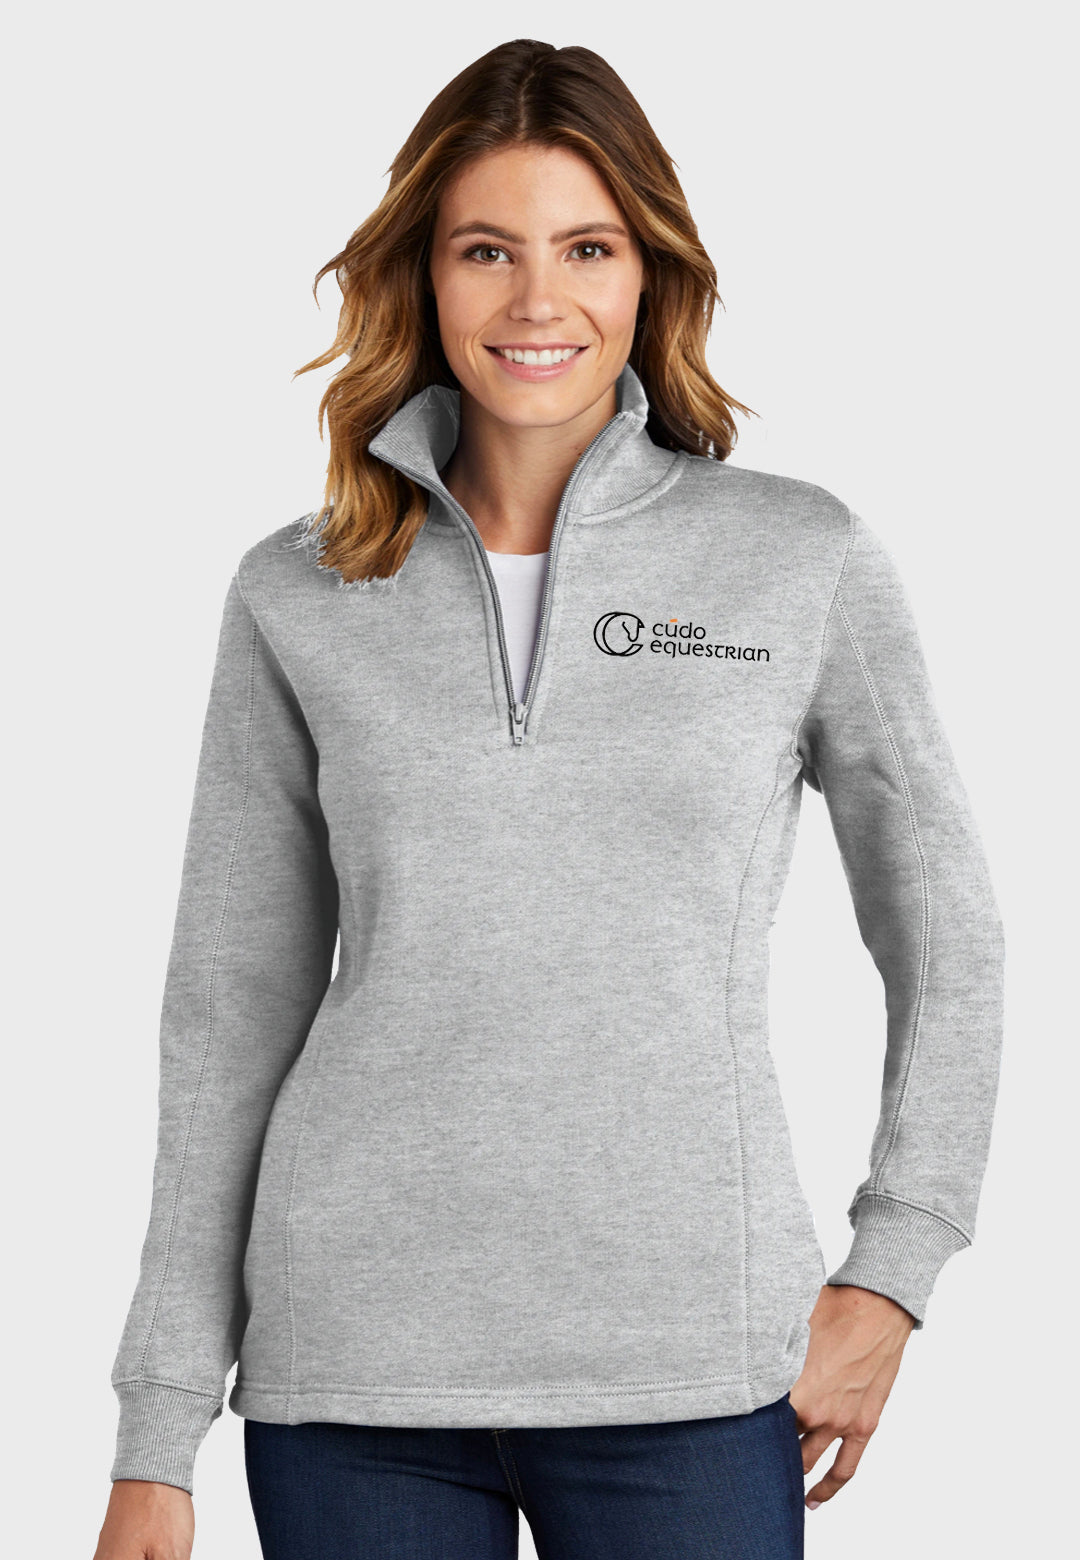 Cudo Equestrian Sport-Tek® Ladies 1/4-Zip Sweatshirt - Heather Grey